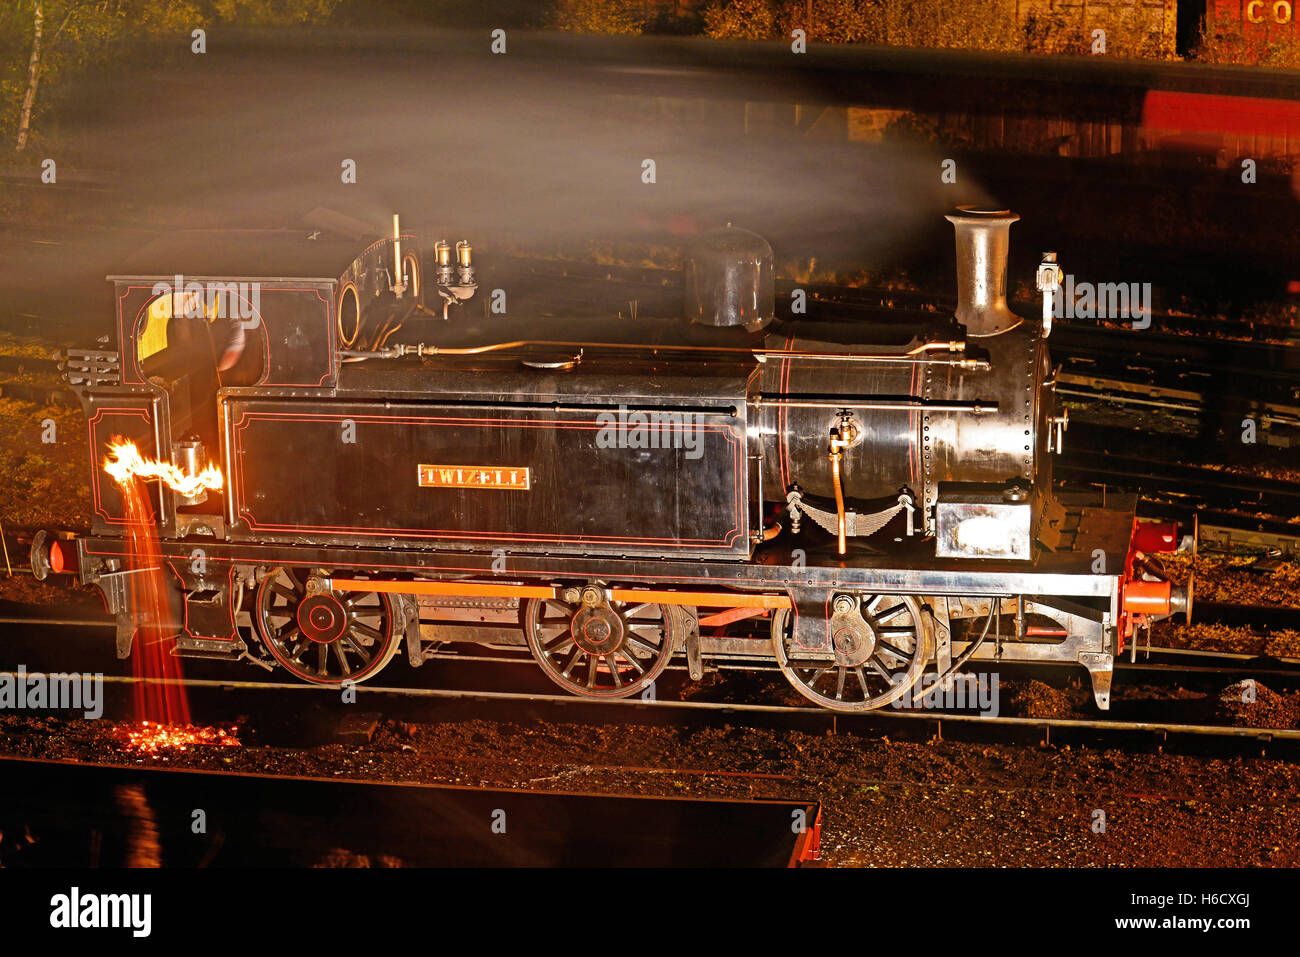 Twizell night steam engine train damping down Stock Photo